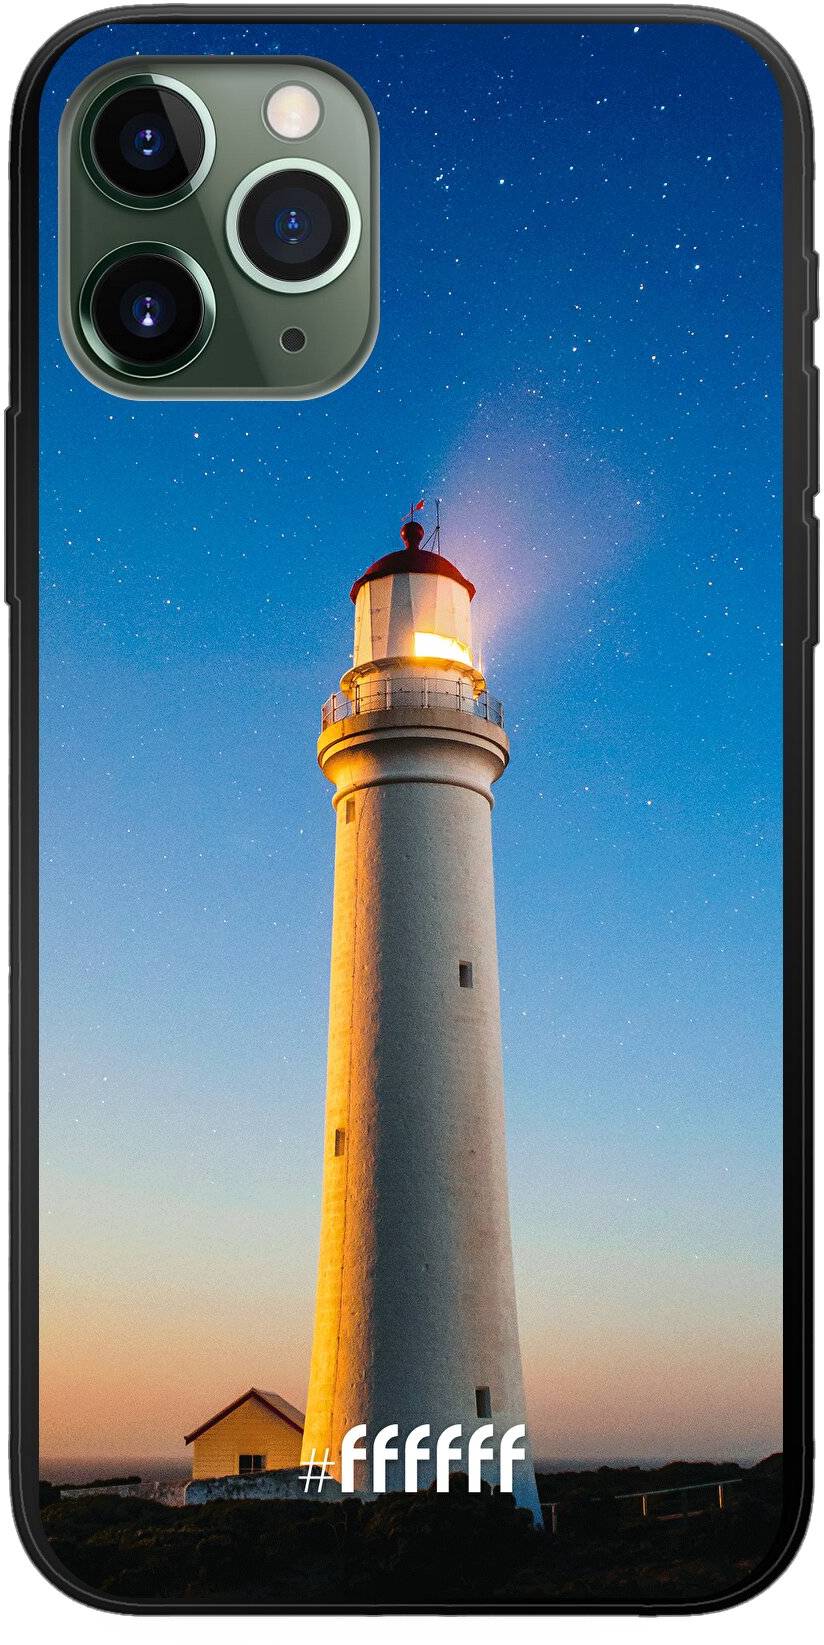 Lighthouse iPhone 11 Pro